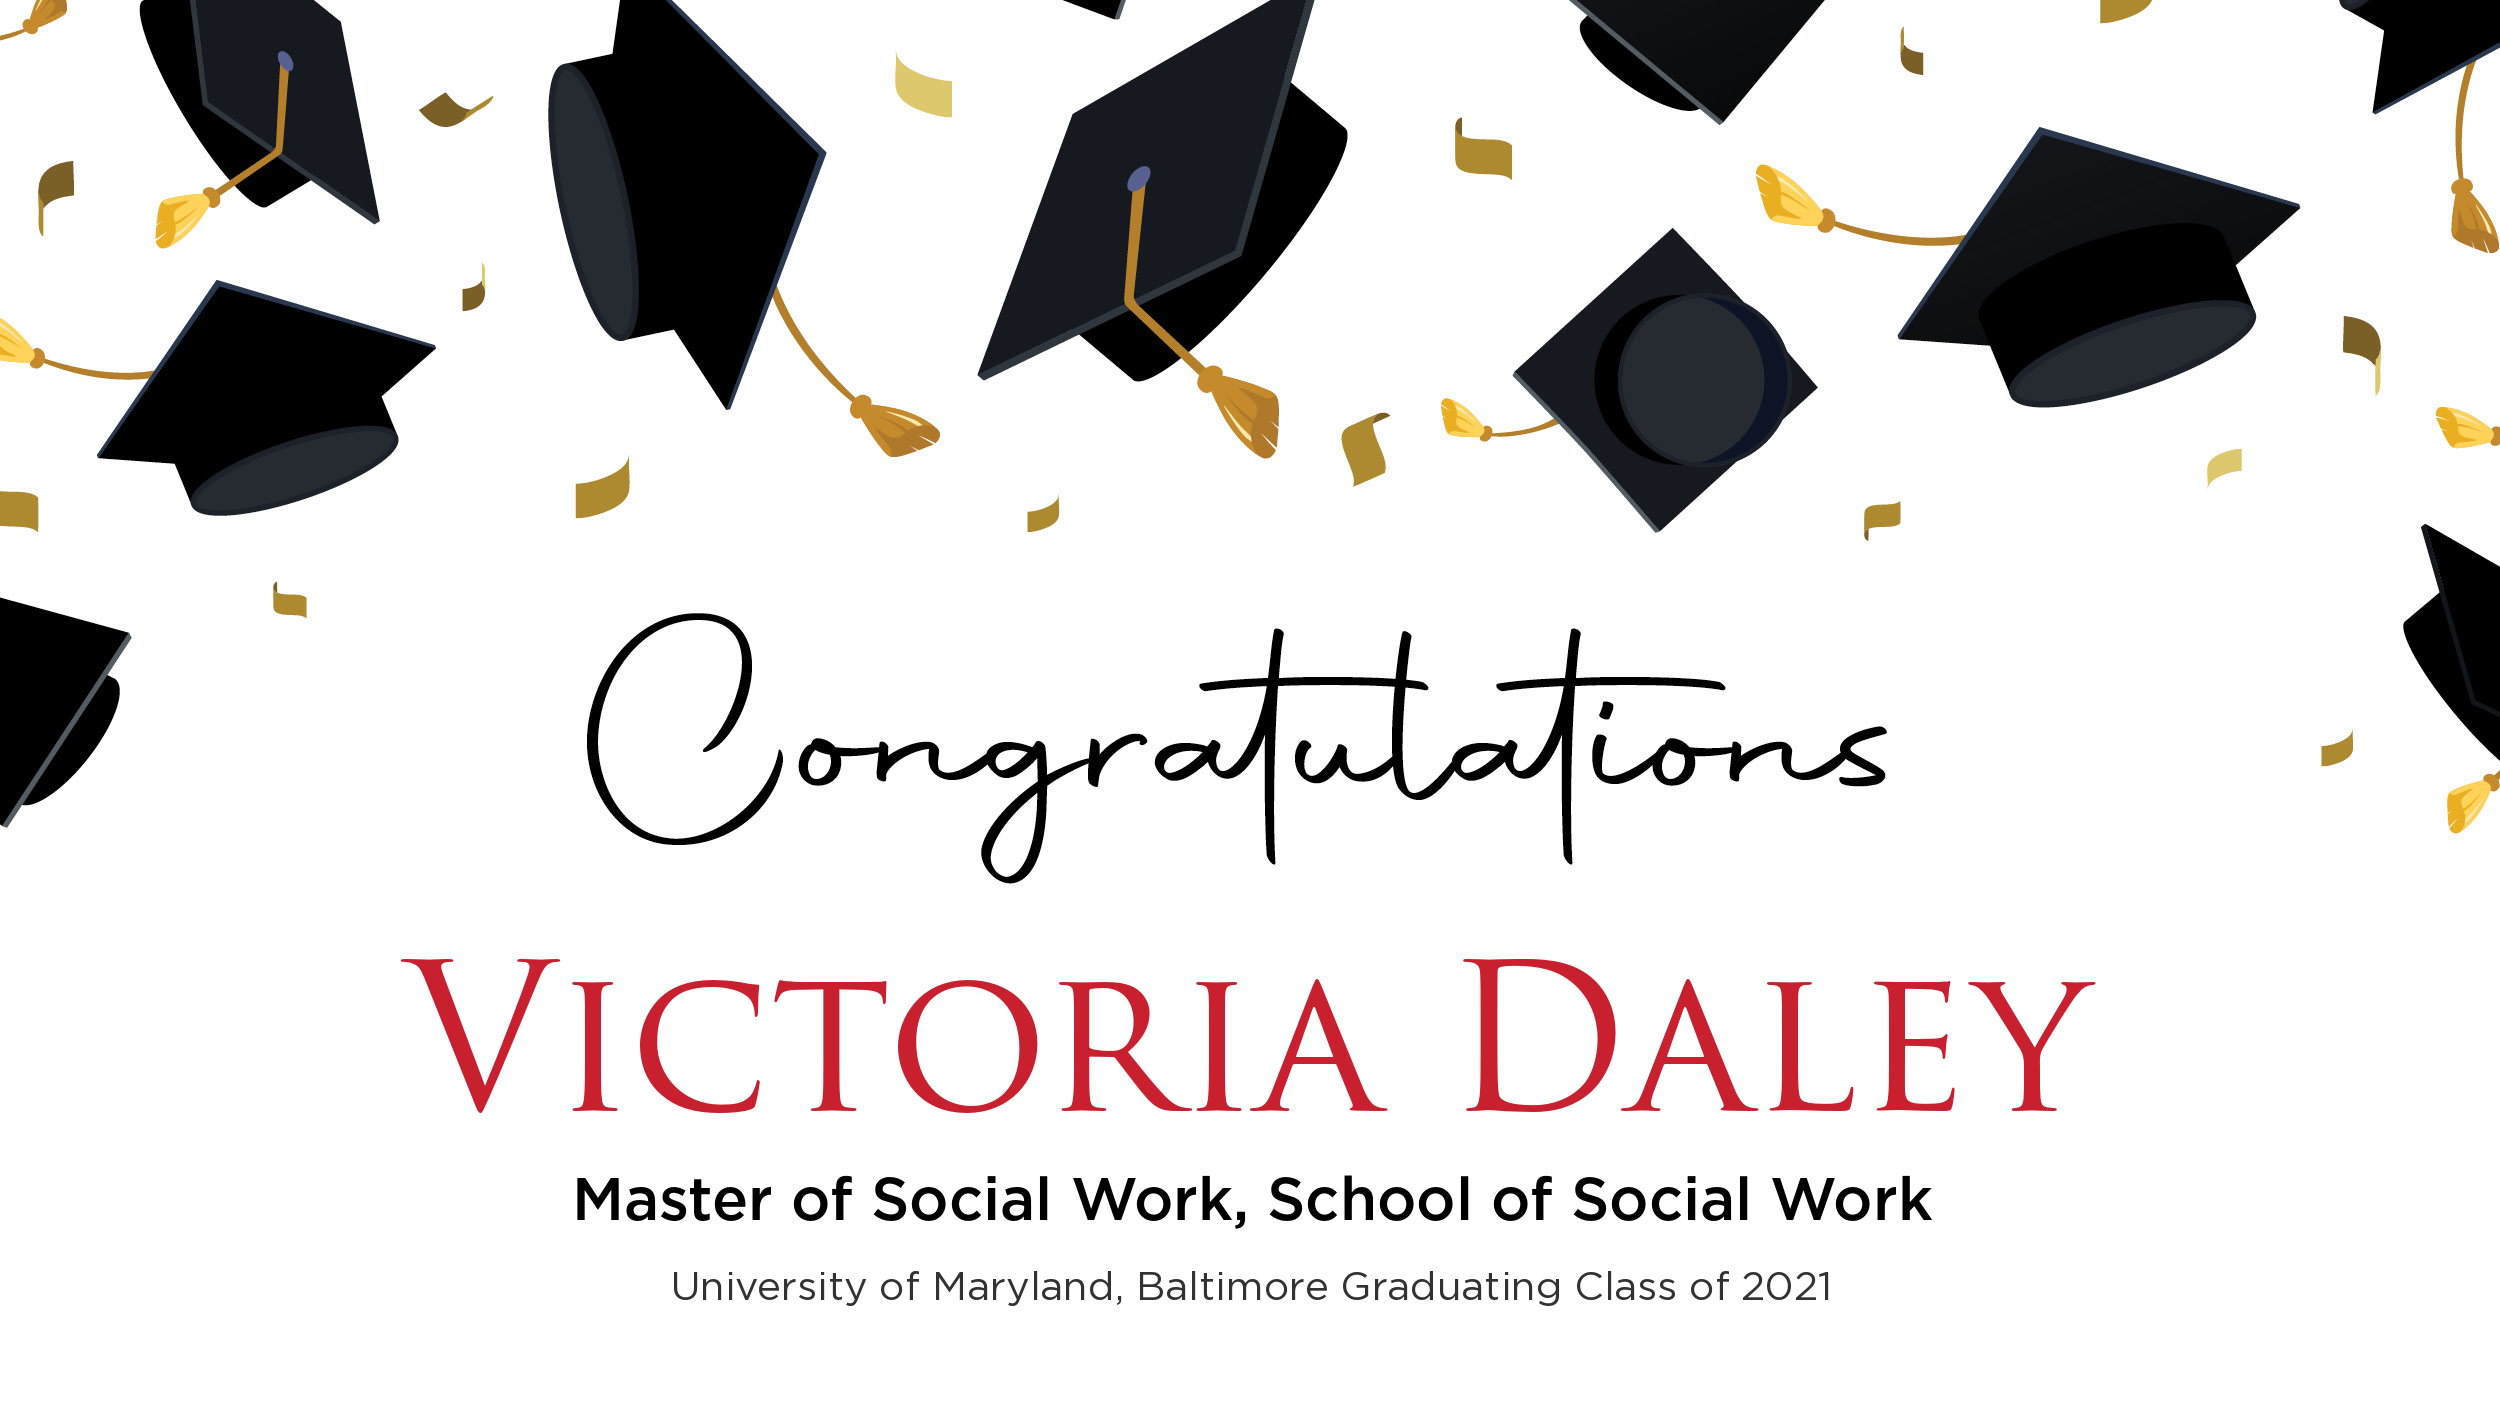 Congratulations Victoria Daley, Master of Social Work